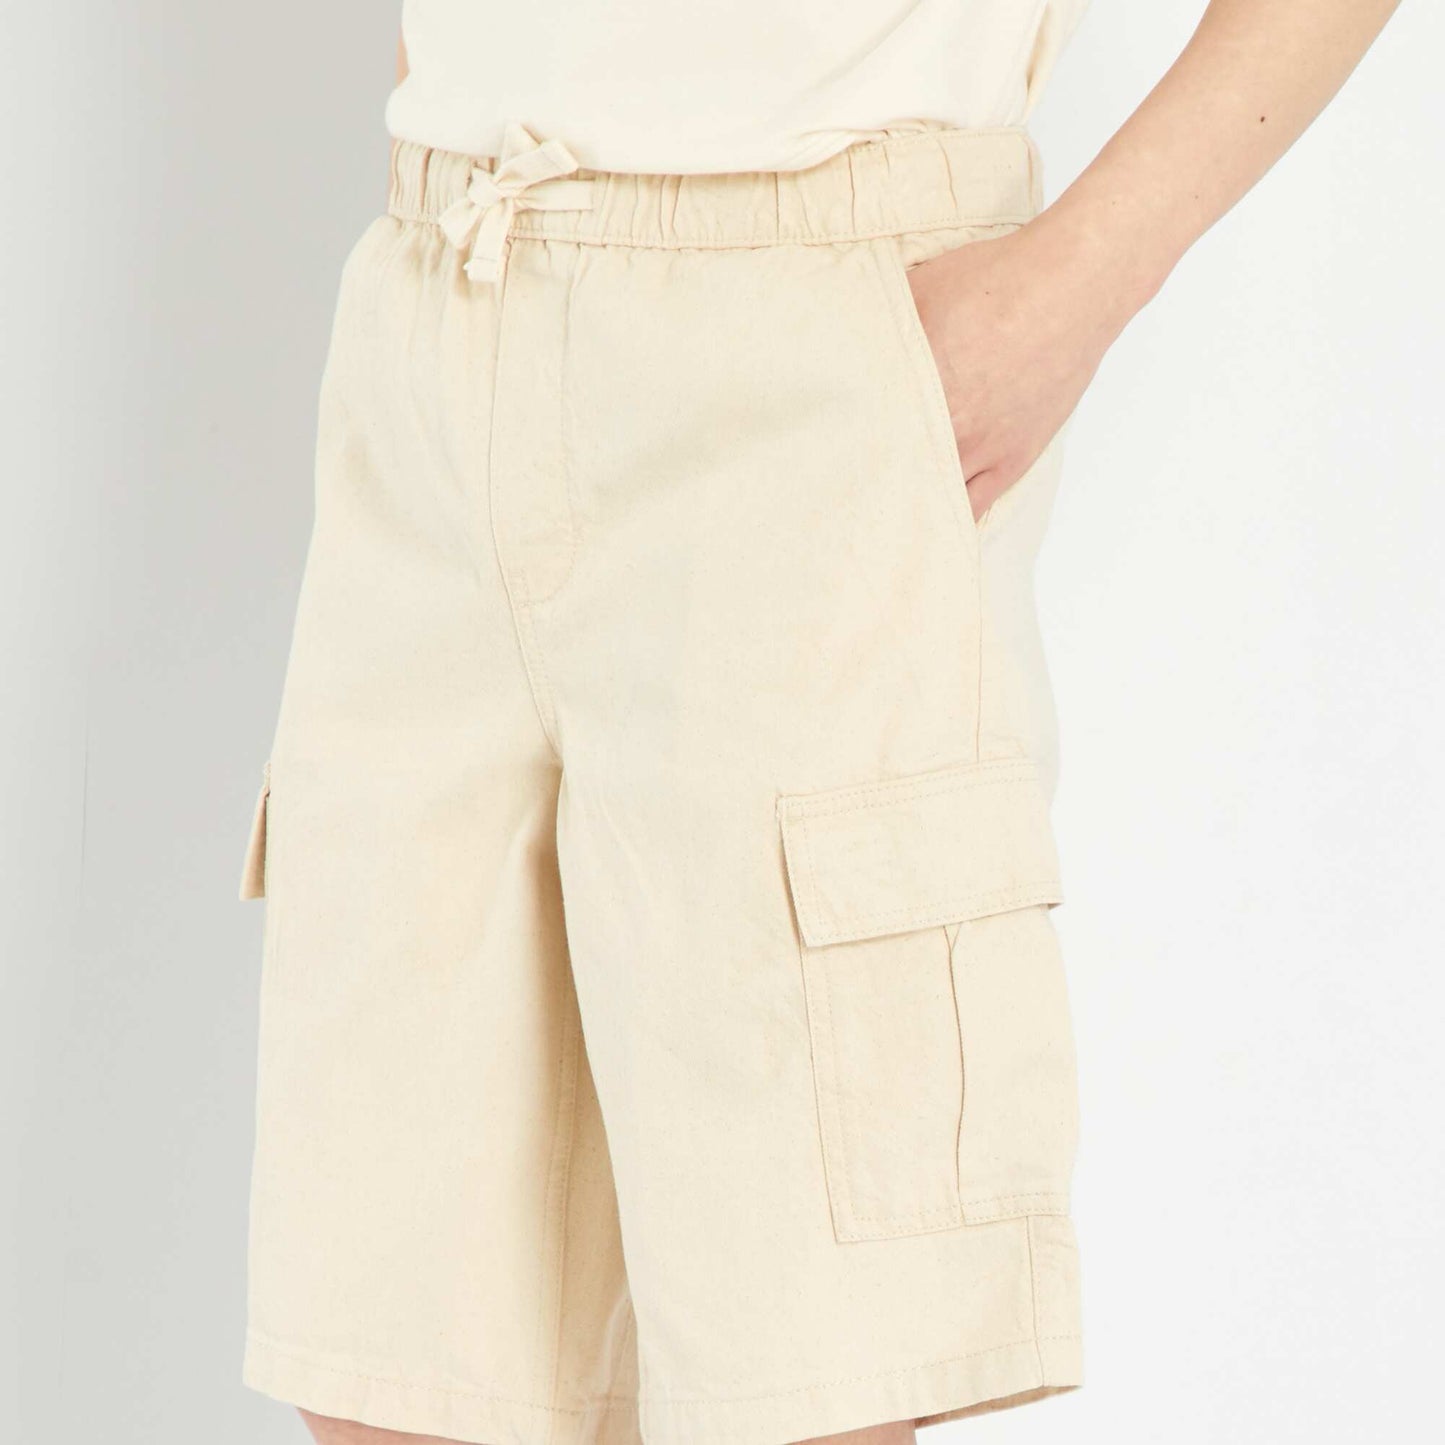 Flecked Bermuda shorts with pockets BEIGE